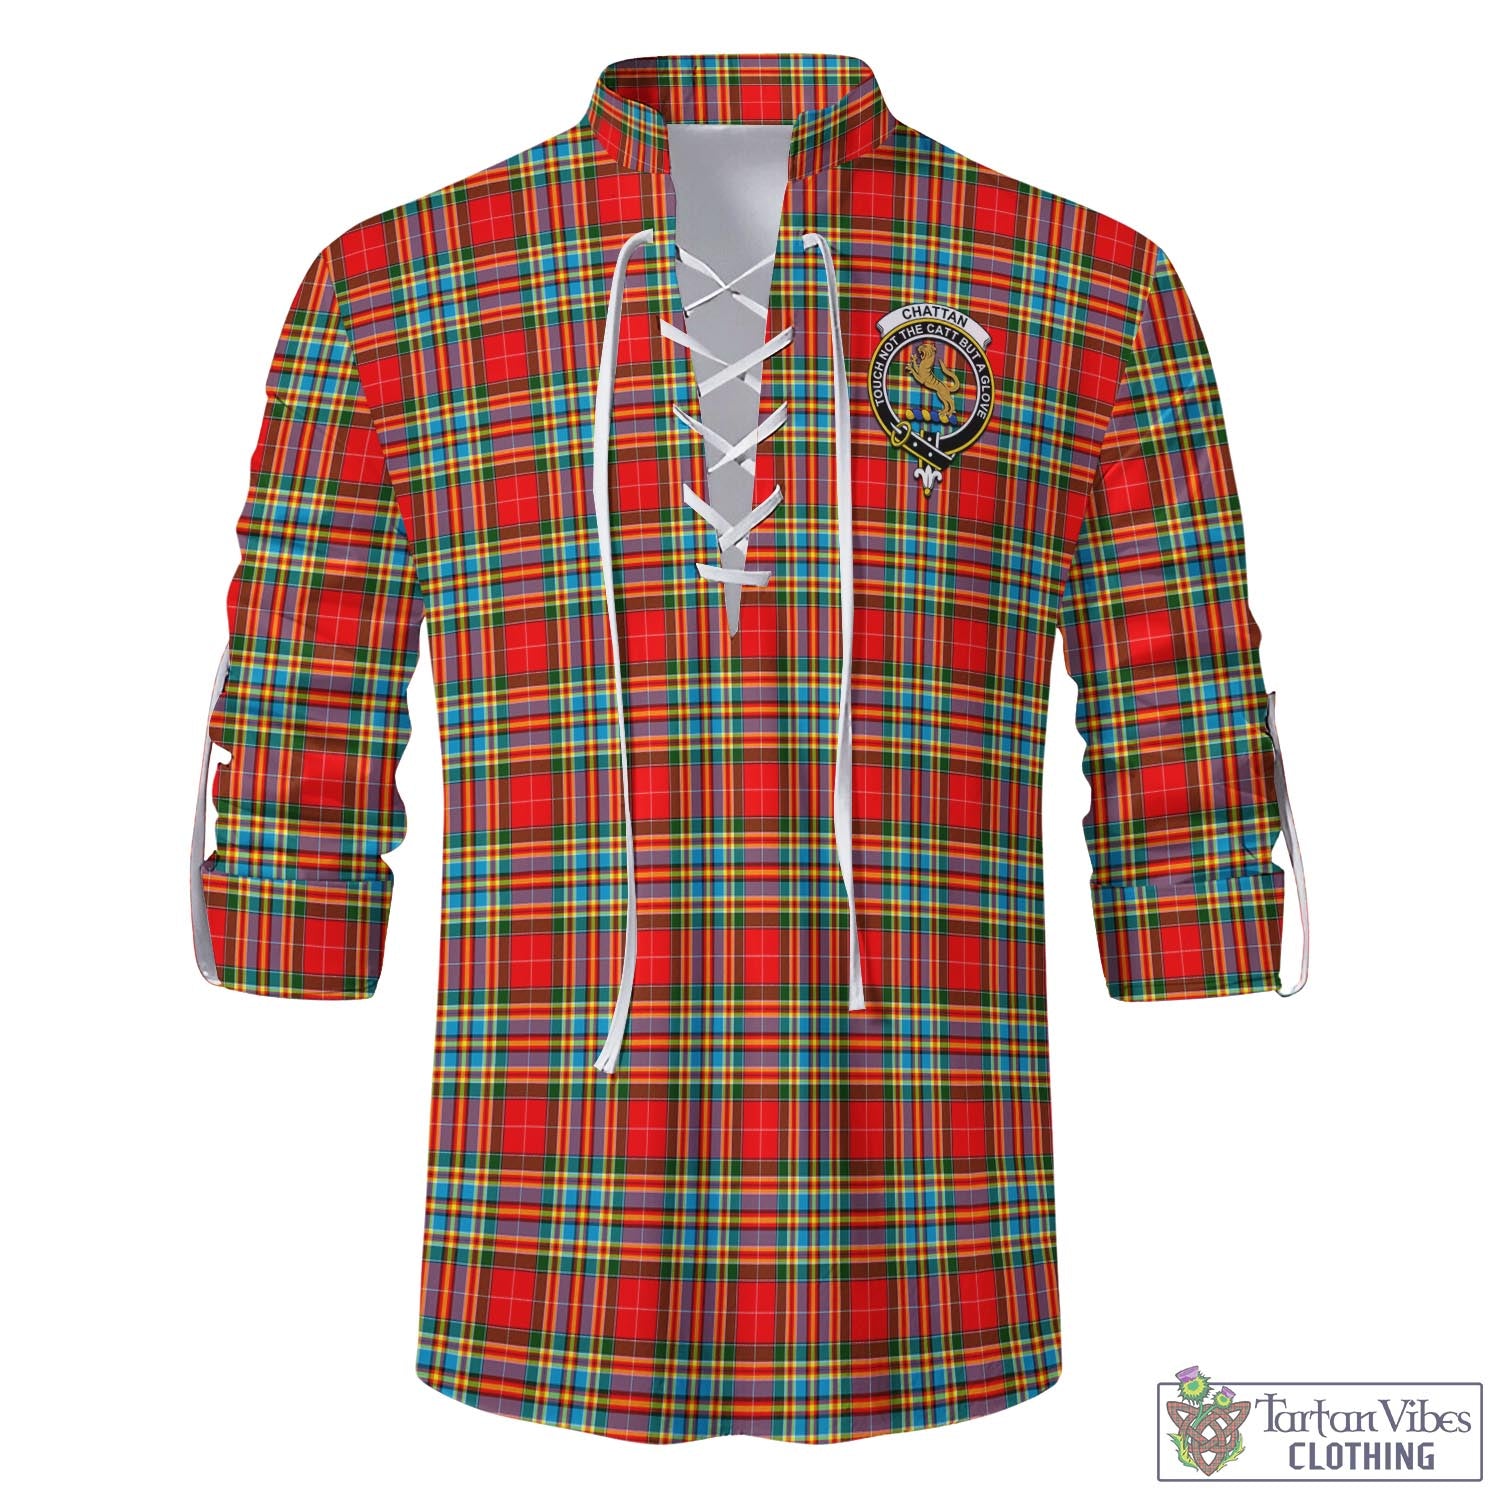 Tartan Vibes Clothing Chattan Tartan Men's Scottish Traditional Jacobite Ghillie Kilt Shirt with Family Crest